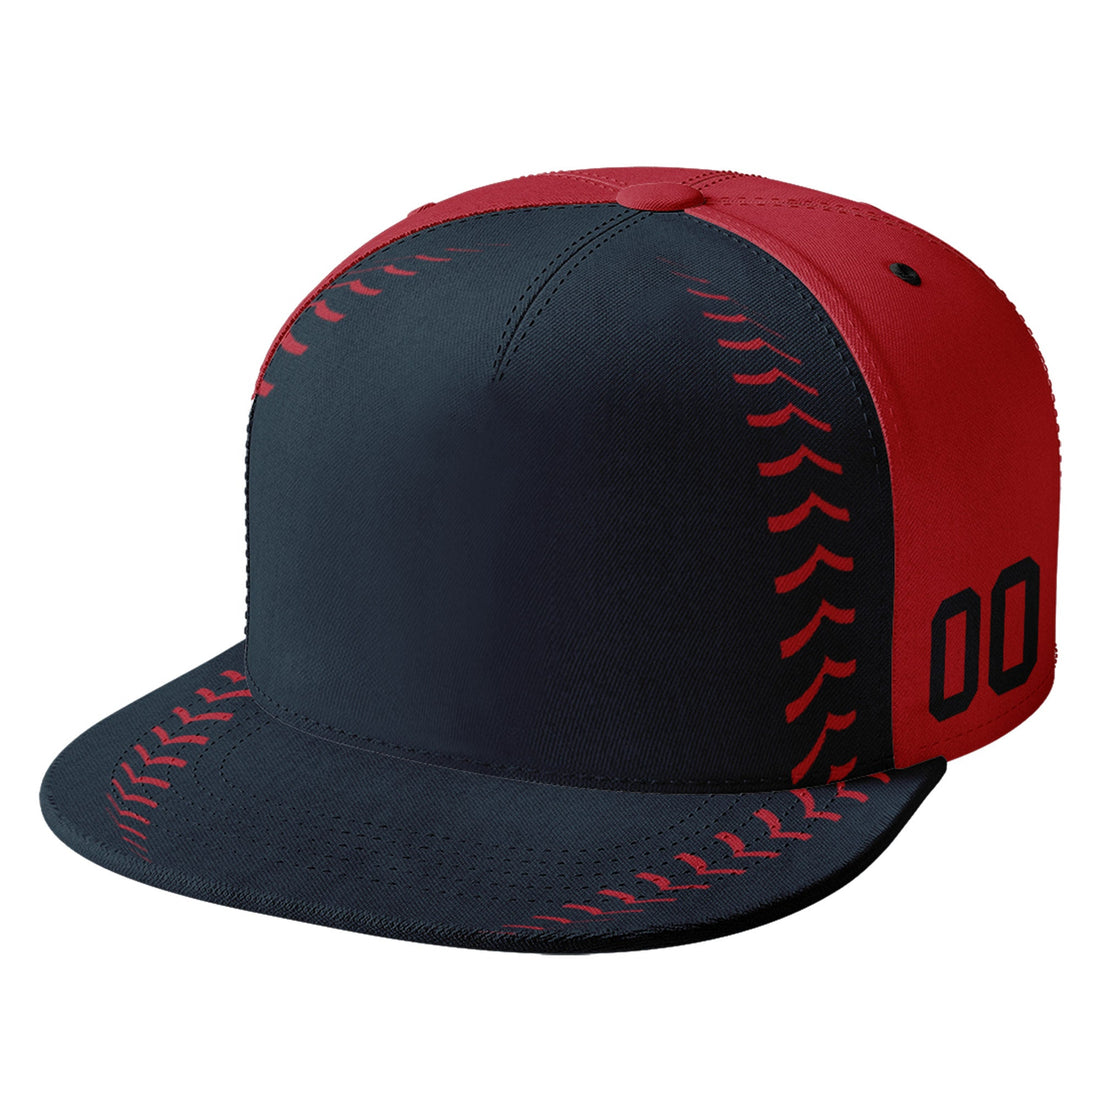 Custom Sport Design Hat Stitched Adjustable Snapback Personalized Baseball Cap PR067B-bd0b00d9-f